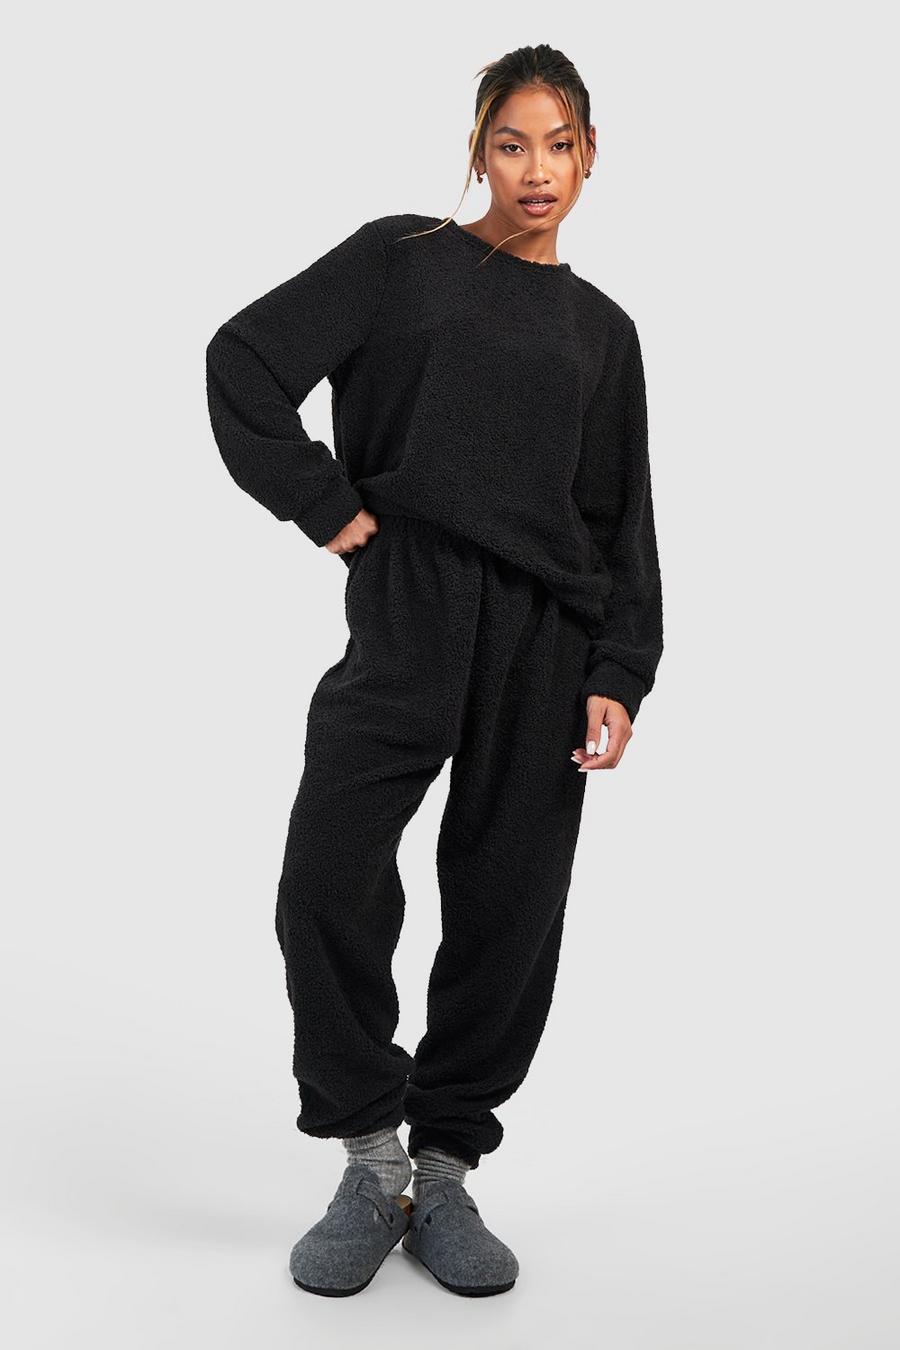 Black Hers Matching Teddy Long Sleeve Loungewear Track Pants Set